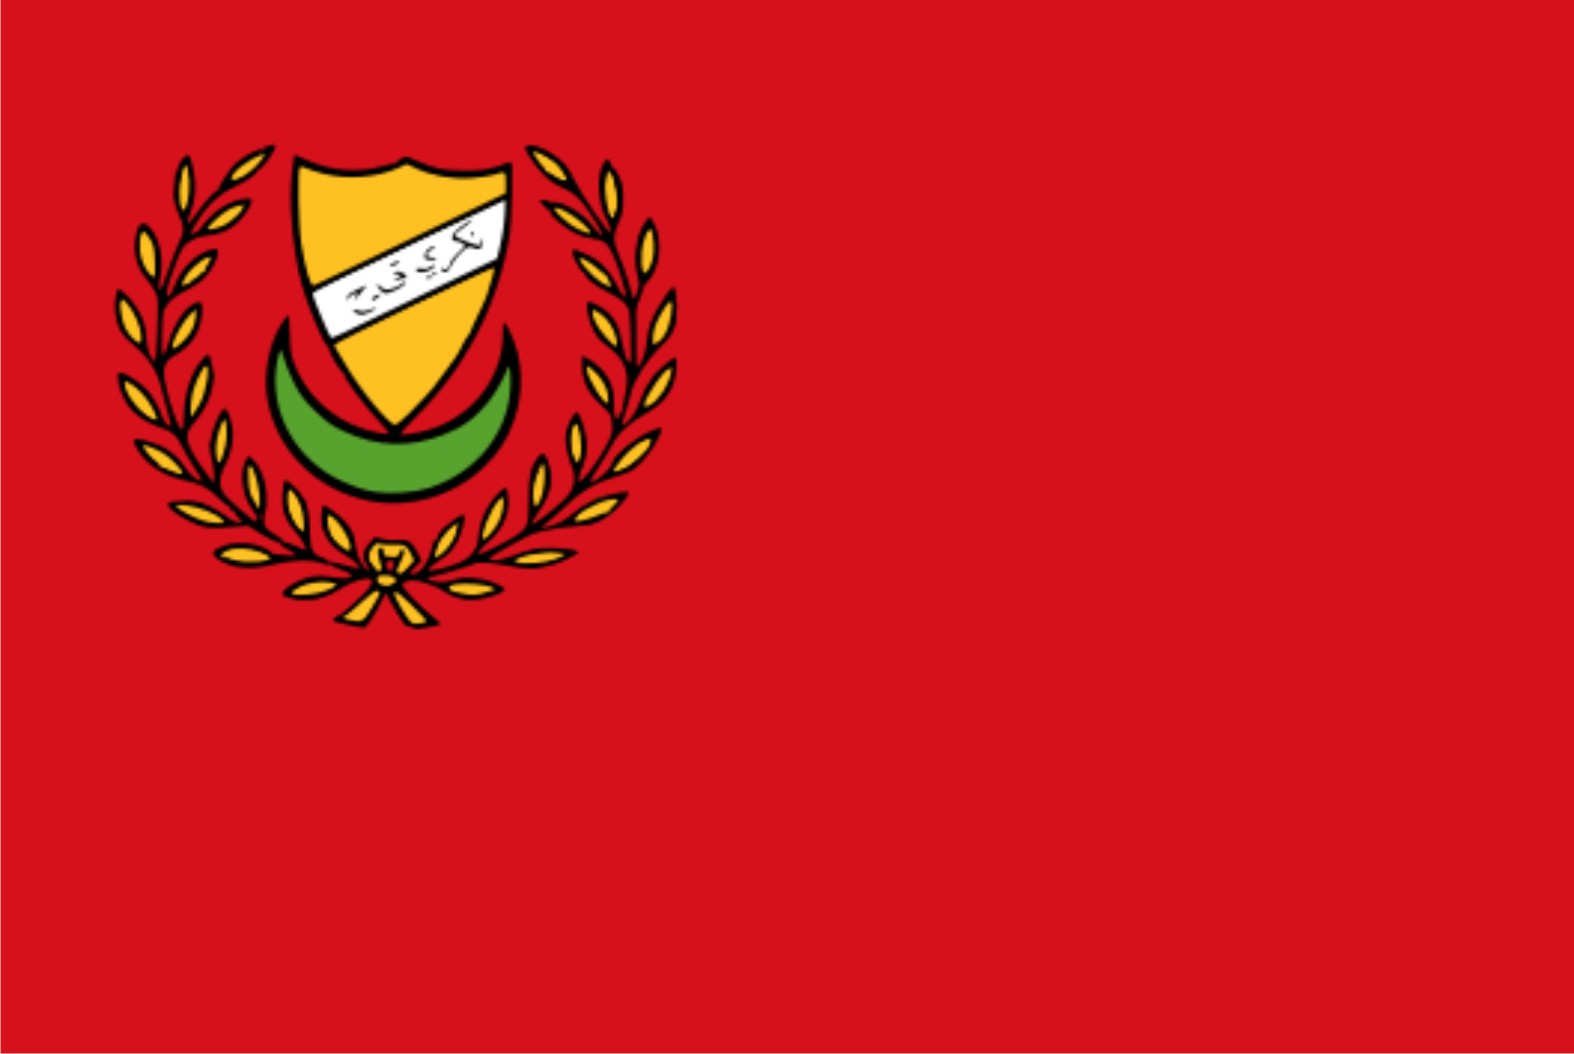 Lambang Bendera negara - negara bagian Malaysia - Kumpulan Logo Indonesia